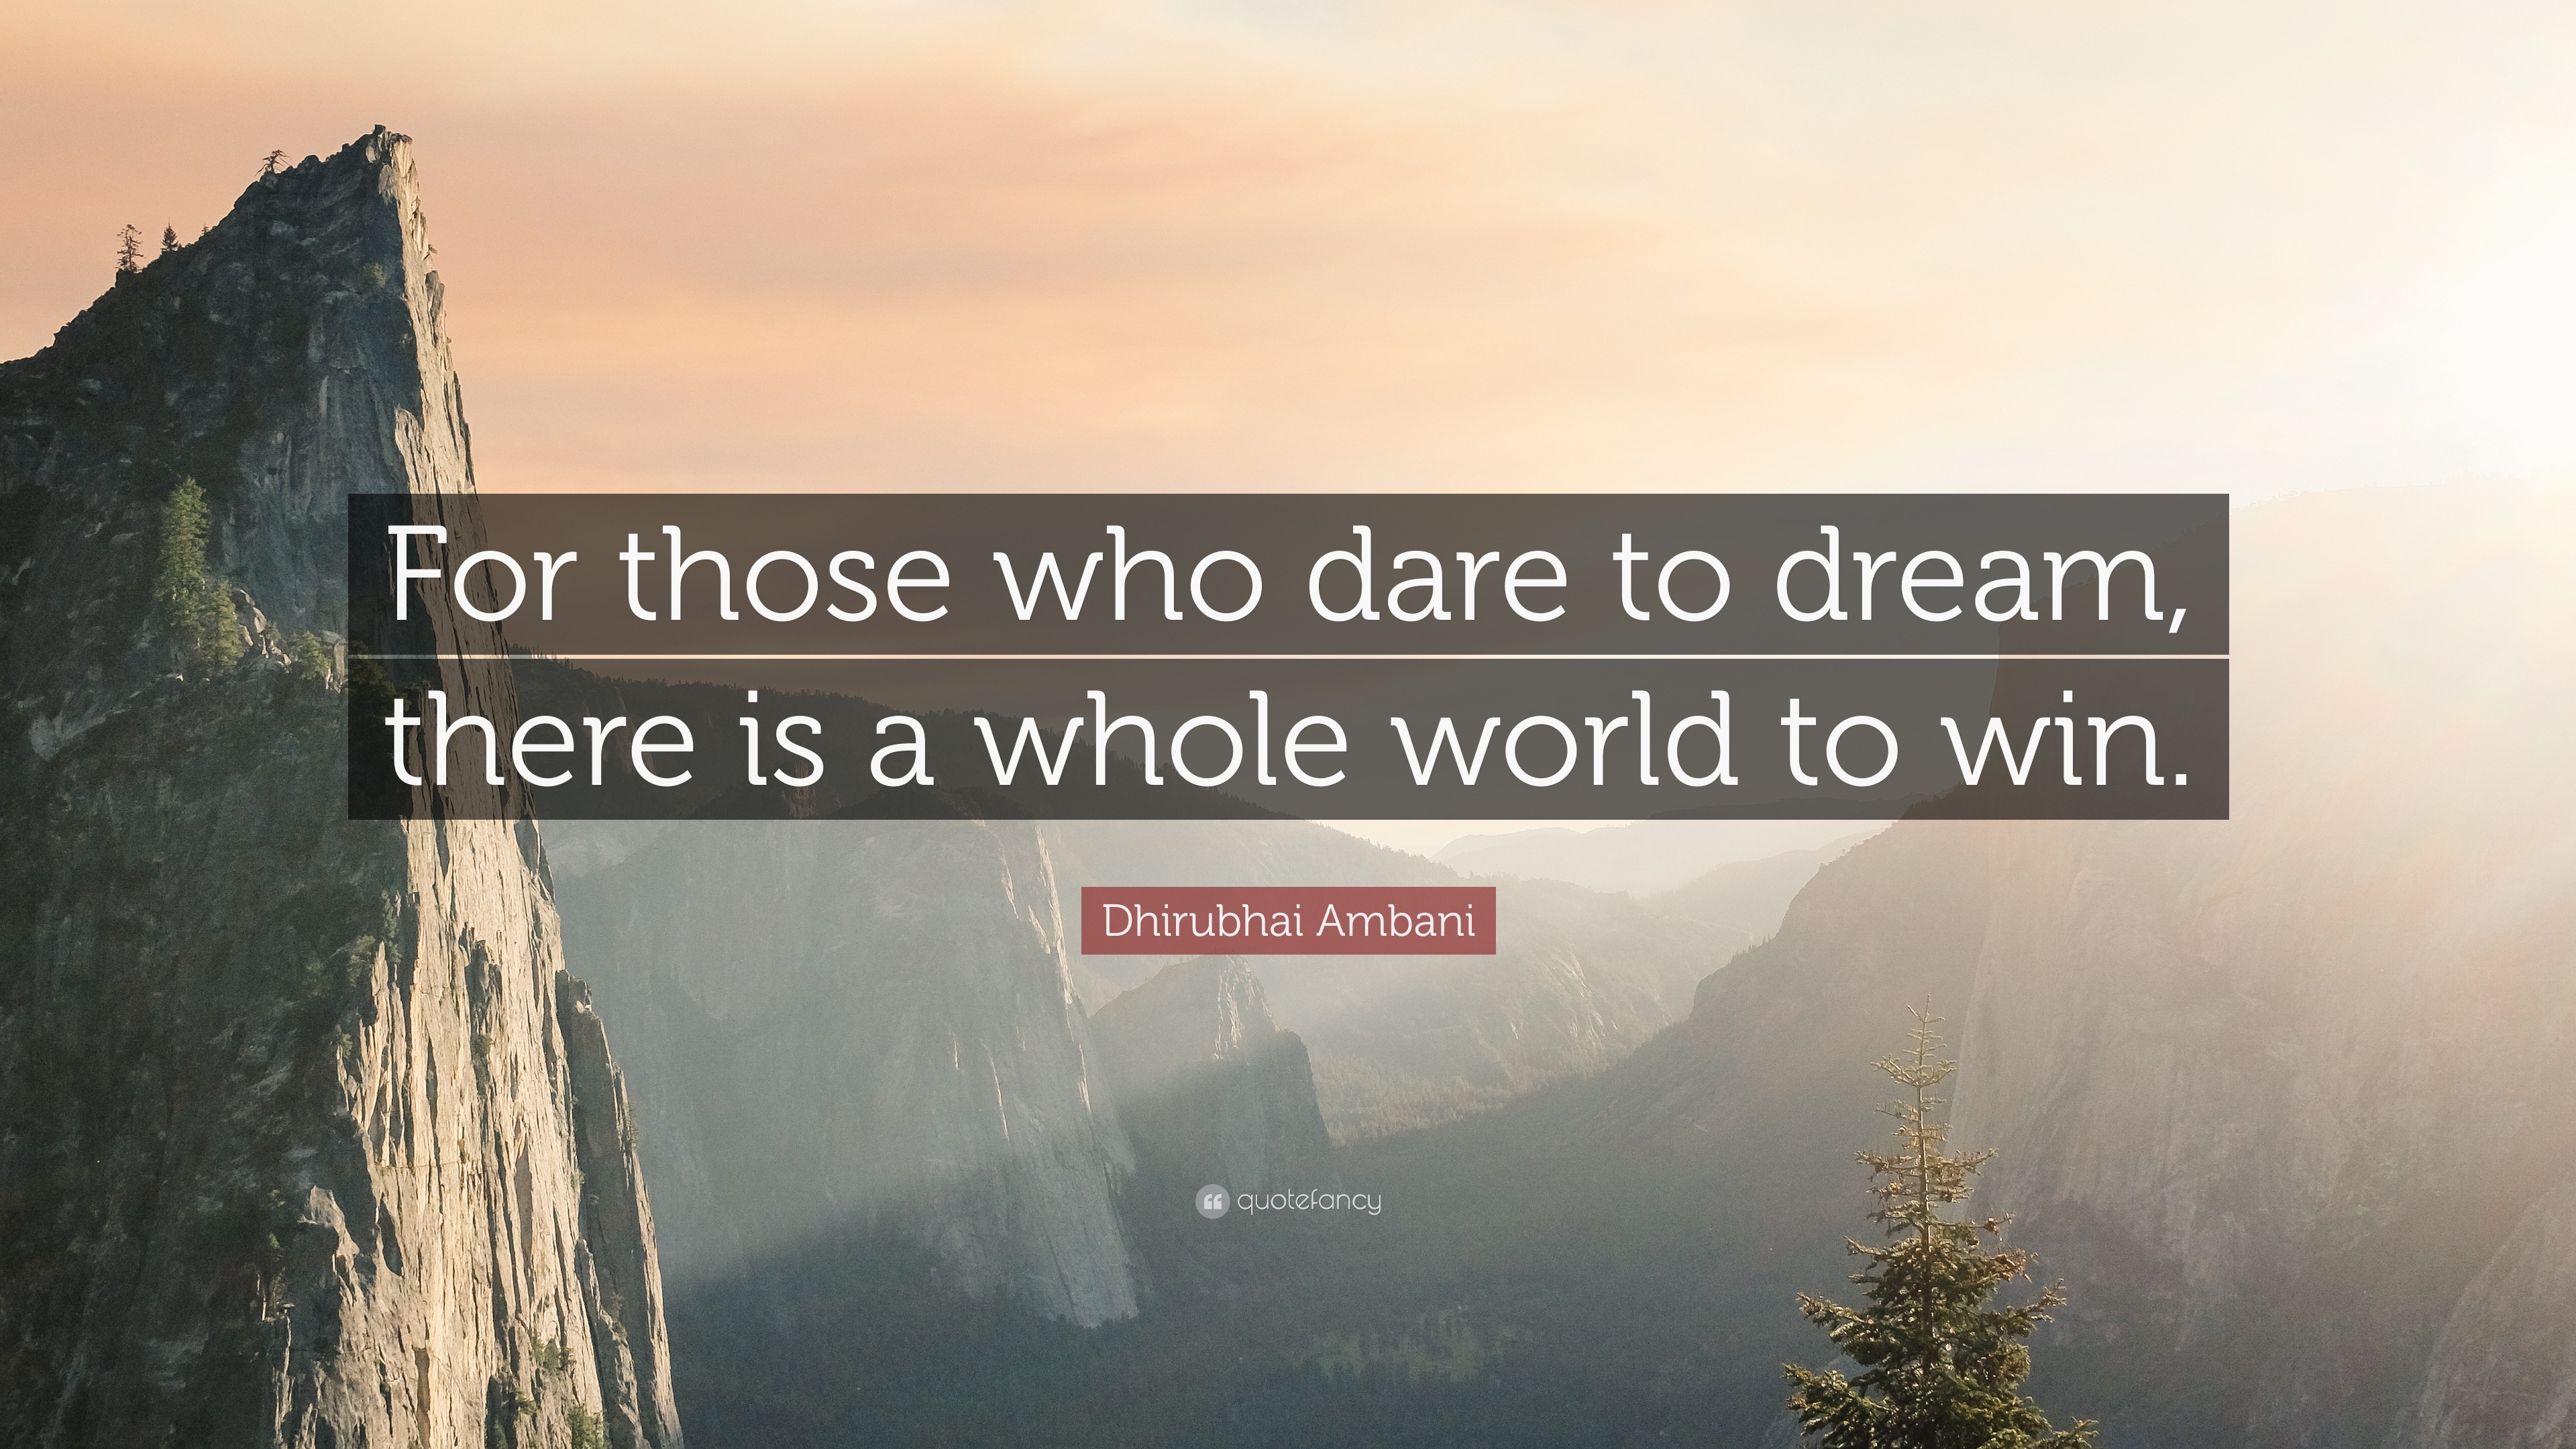 Dhirubhai Ambani Quote: "For those who dare to dream ...